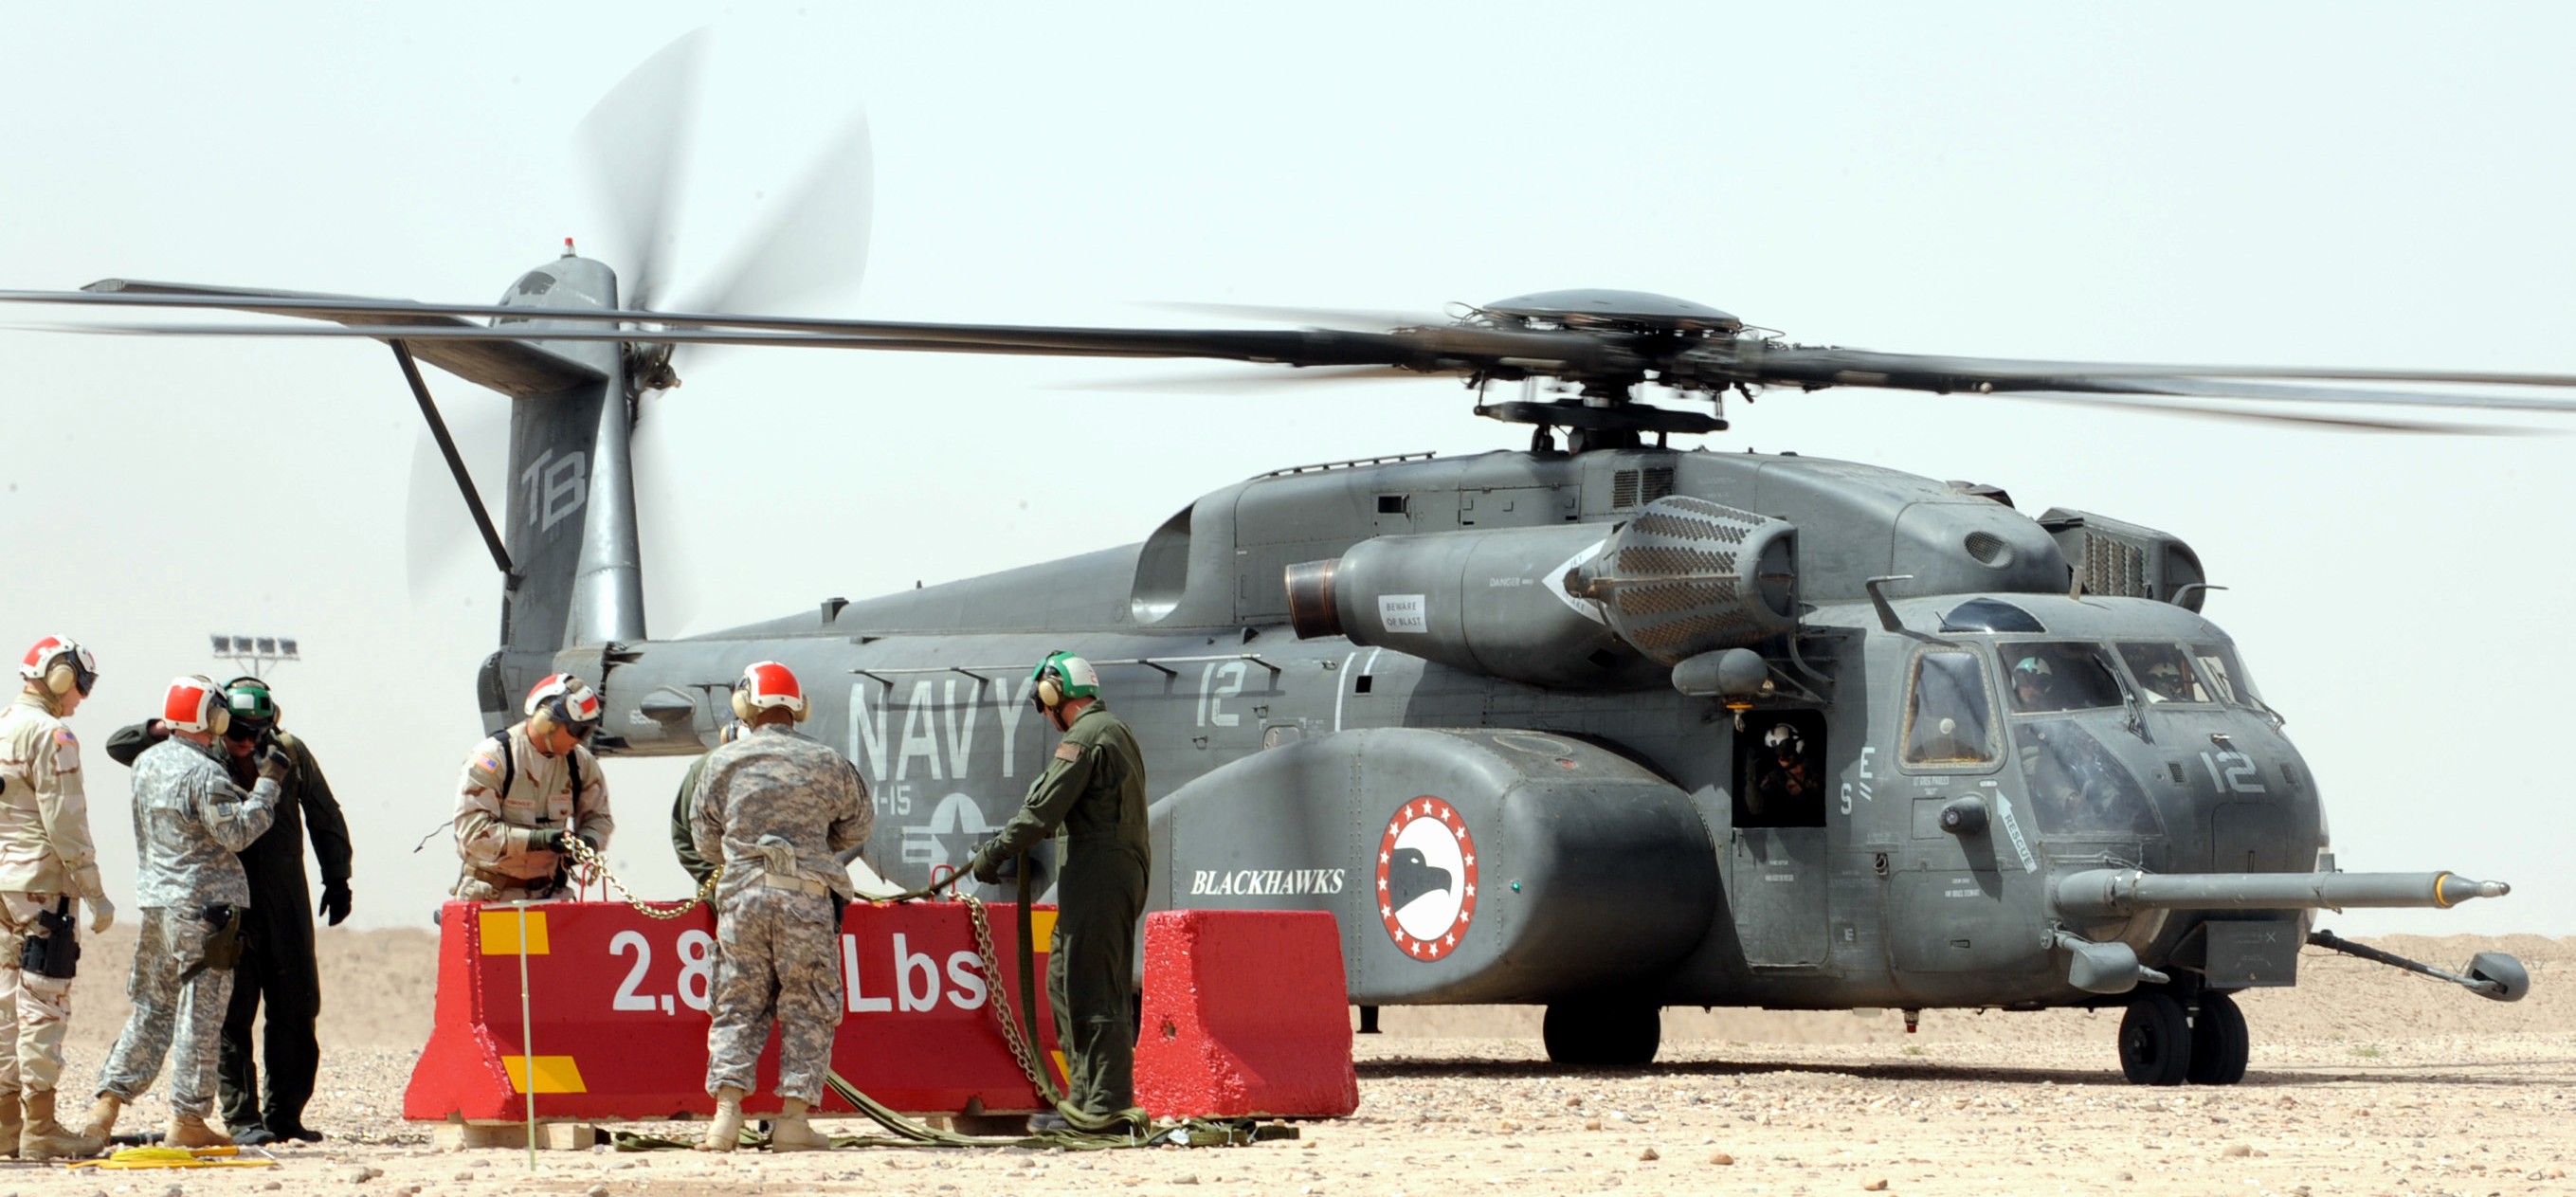 hm-15 blackhawks helicopter mine countermeasures squadron navy mh-53e sea dragon 127